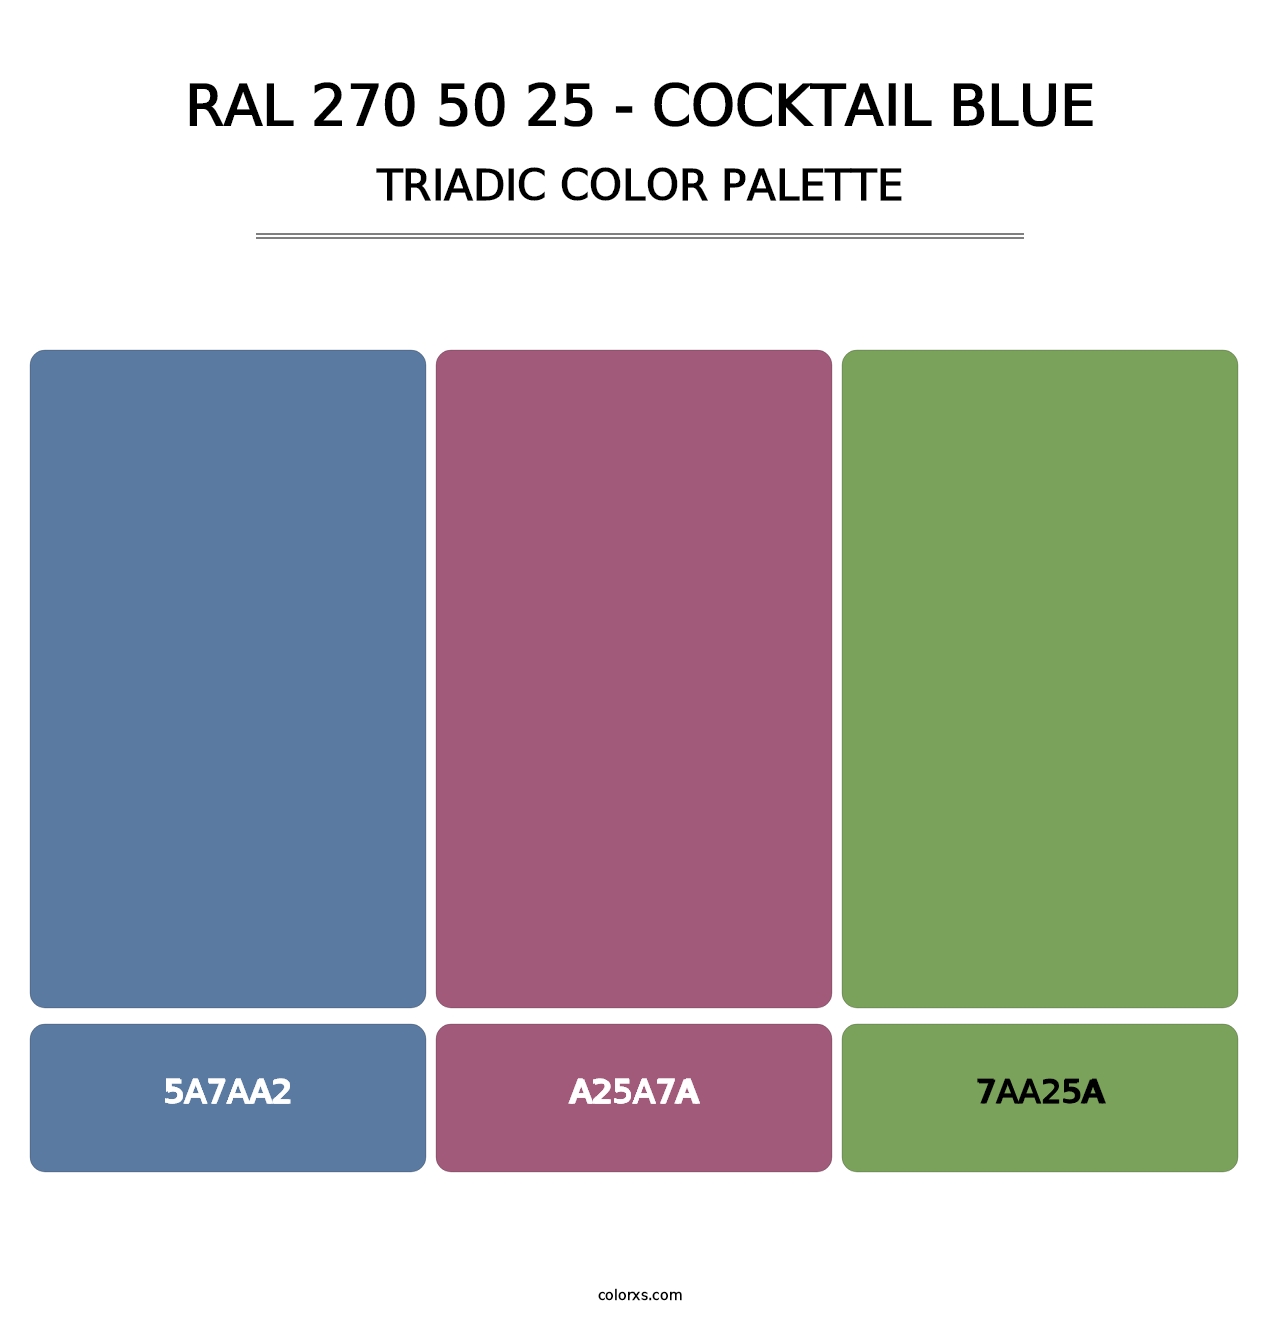 RAL 270 50 25 - Cocktail Blue - Triadic Color Palette